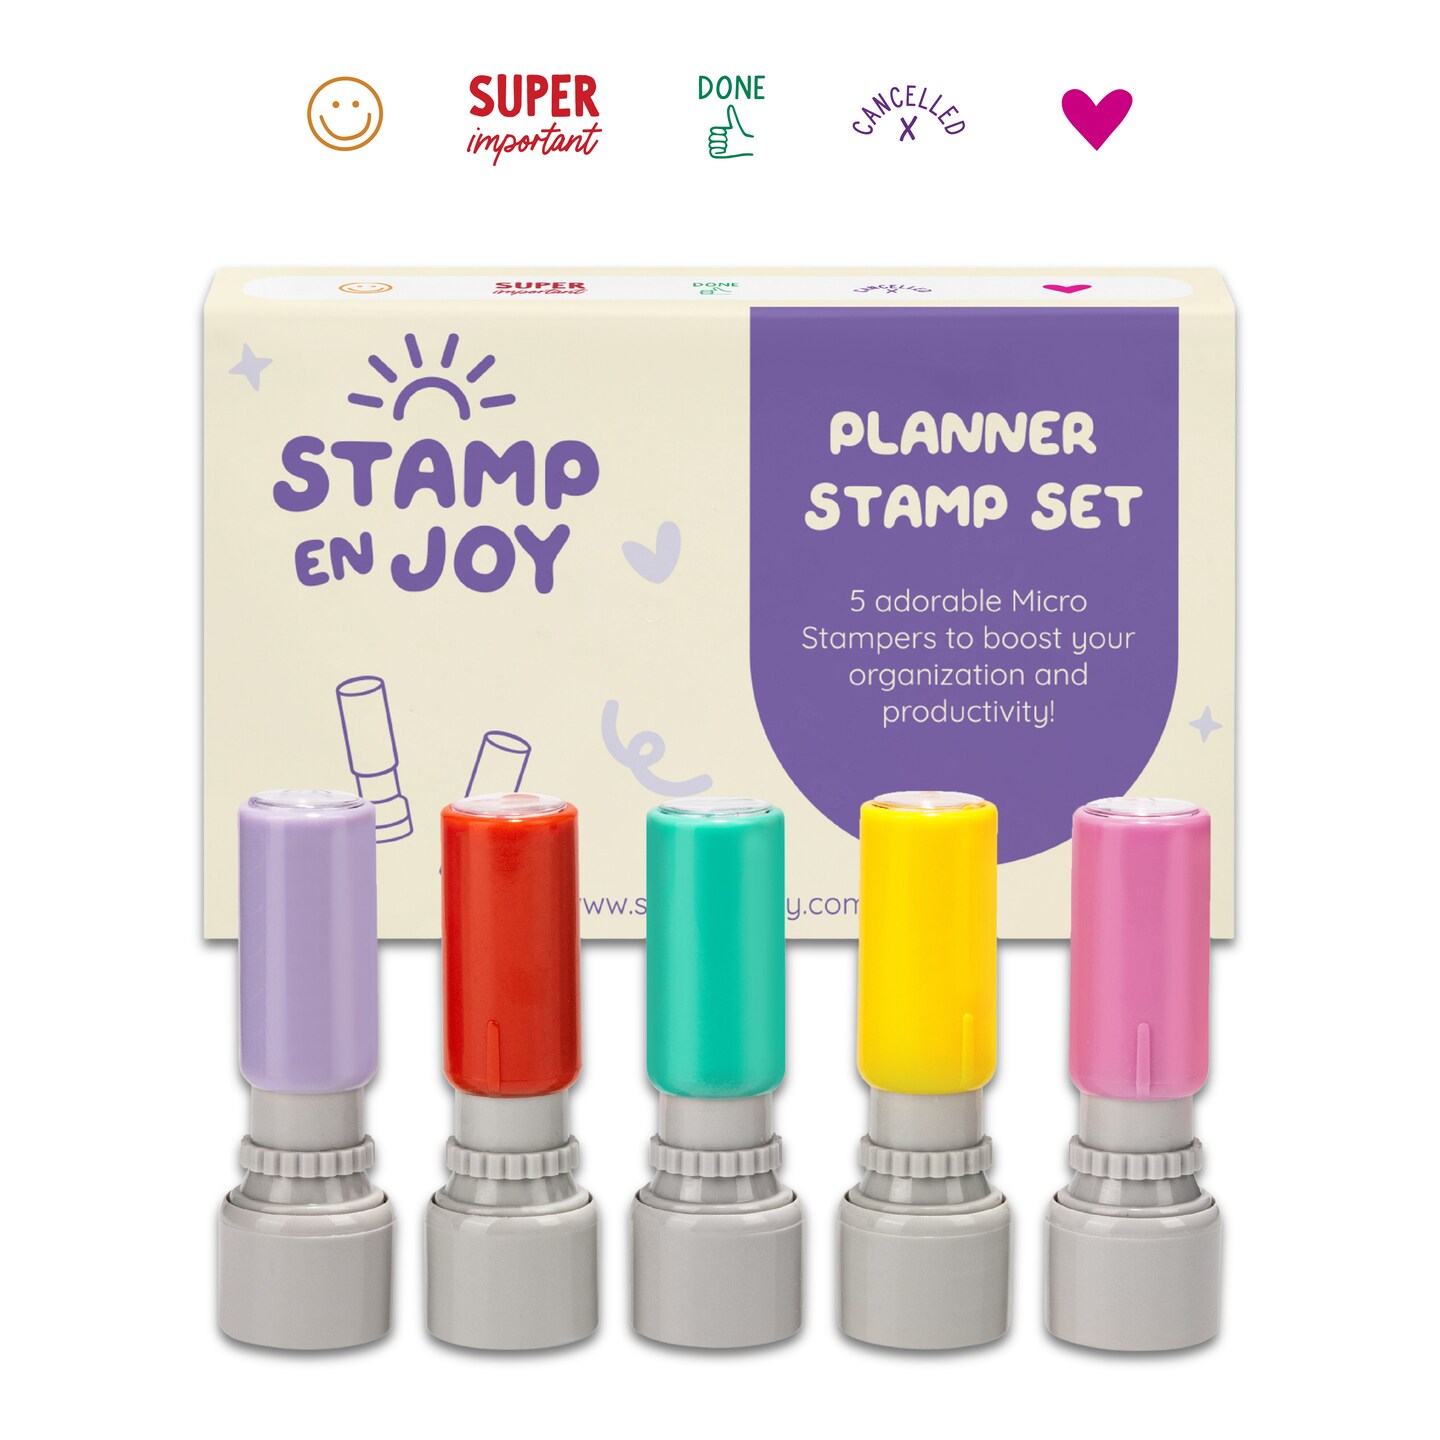 Stamp Enjoy - Self-Ink Flash Stamp Set, Multicolor Teacher Stamps, Office Stationery Stamps, Pre-Inked, Refillable Stamps (Planner Stamps)